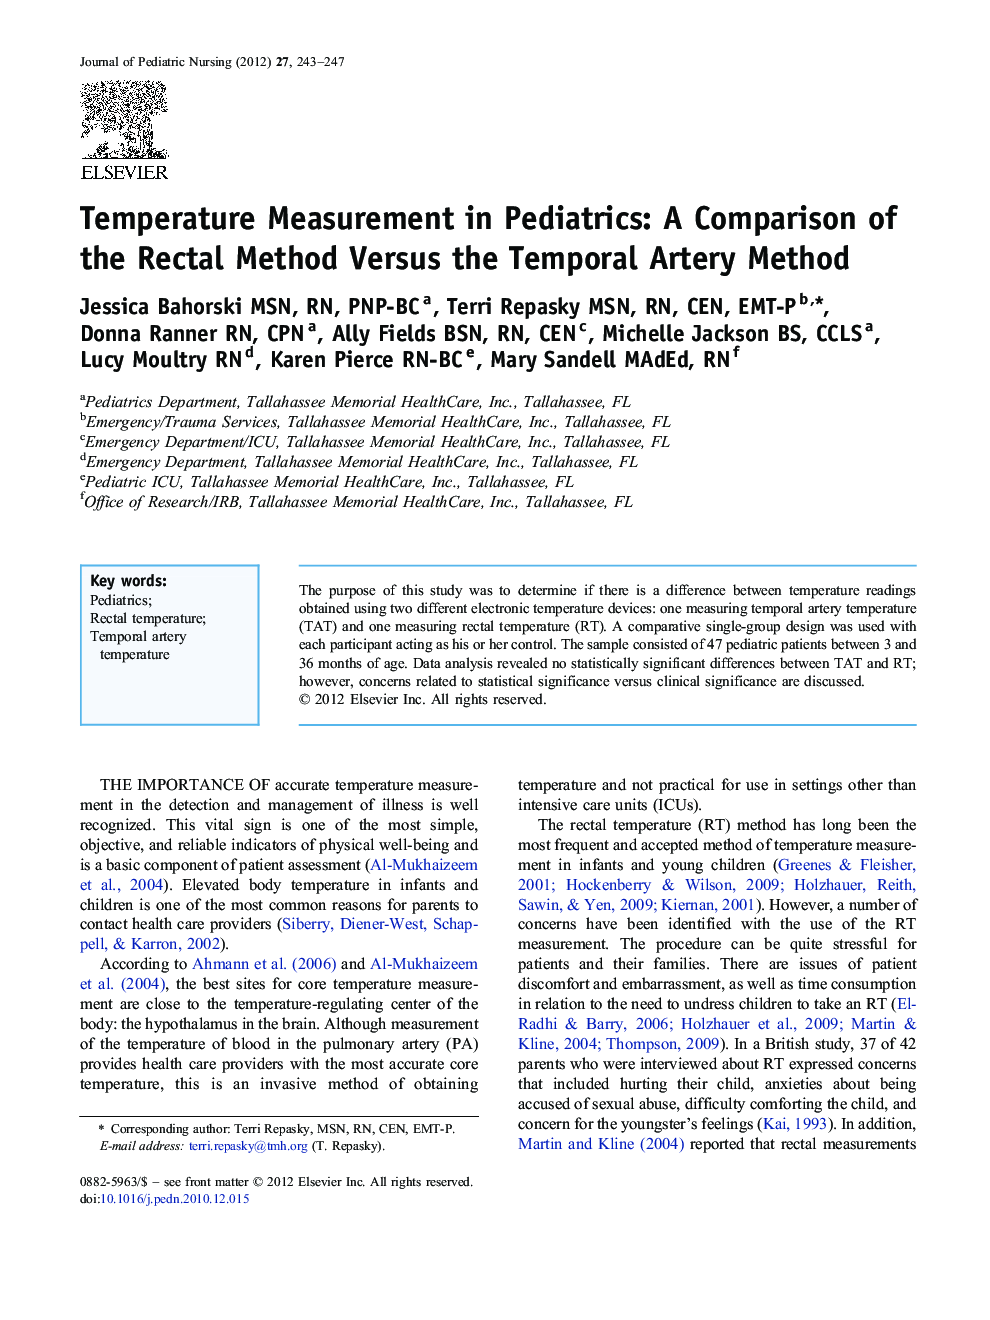 Temperature Measurement in Pediatrics: A Comparison of the Rectal Method Versus the Temporal Artery Method